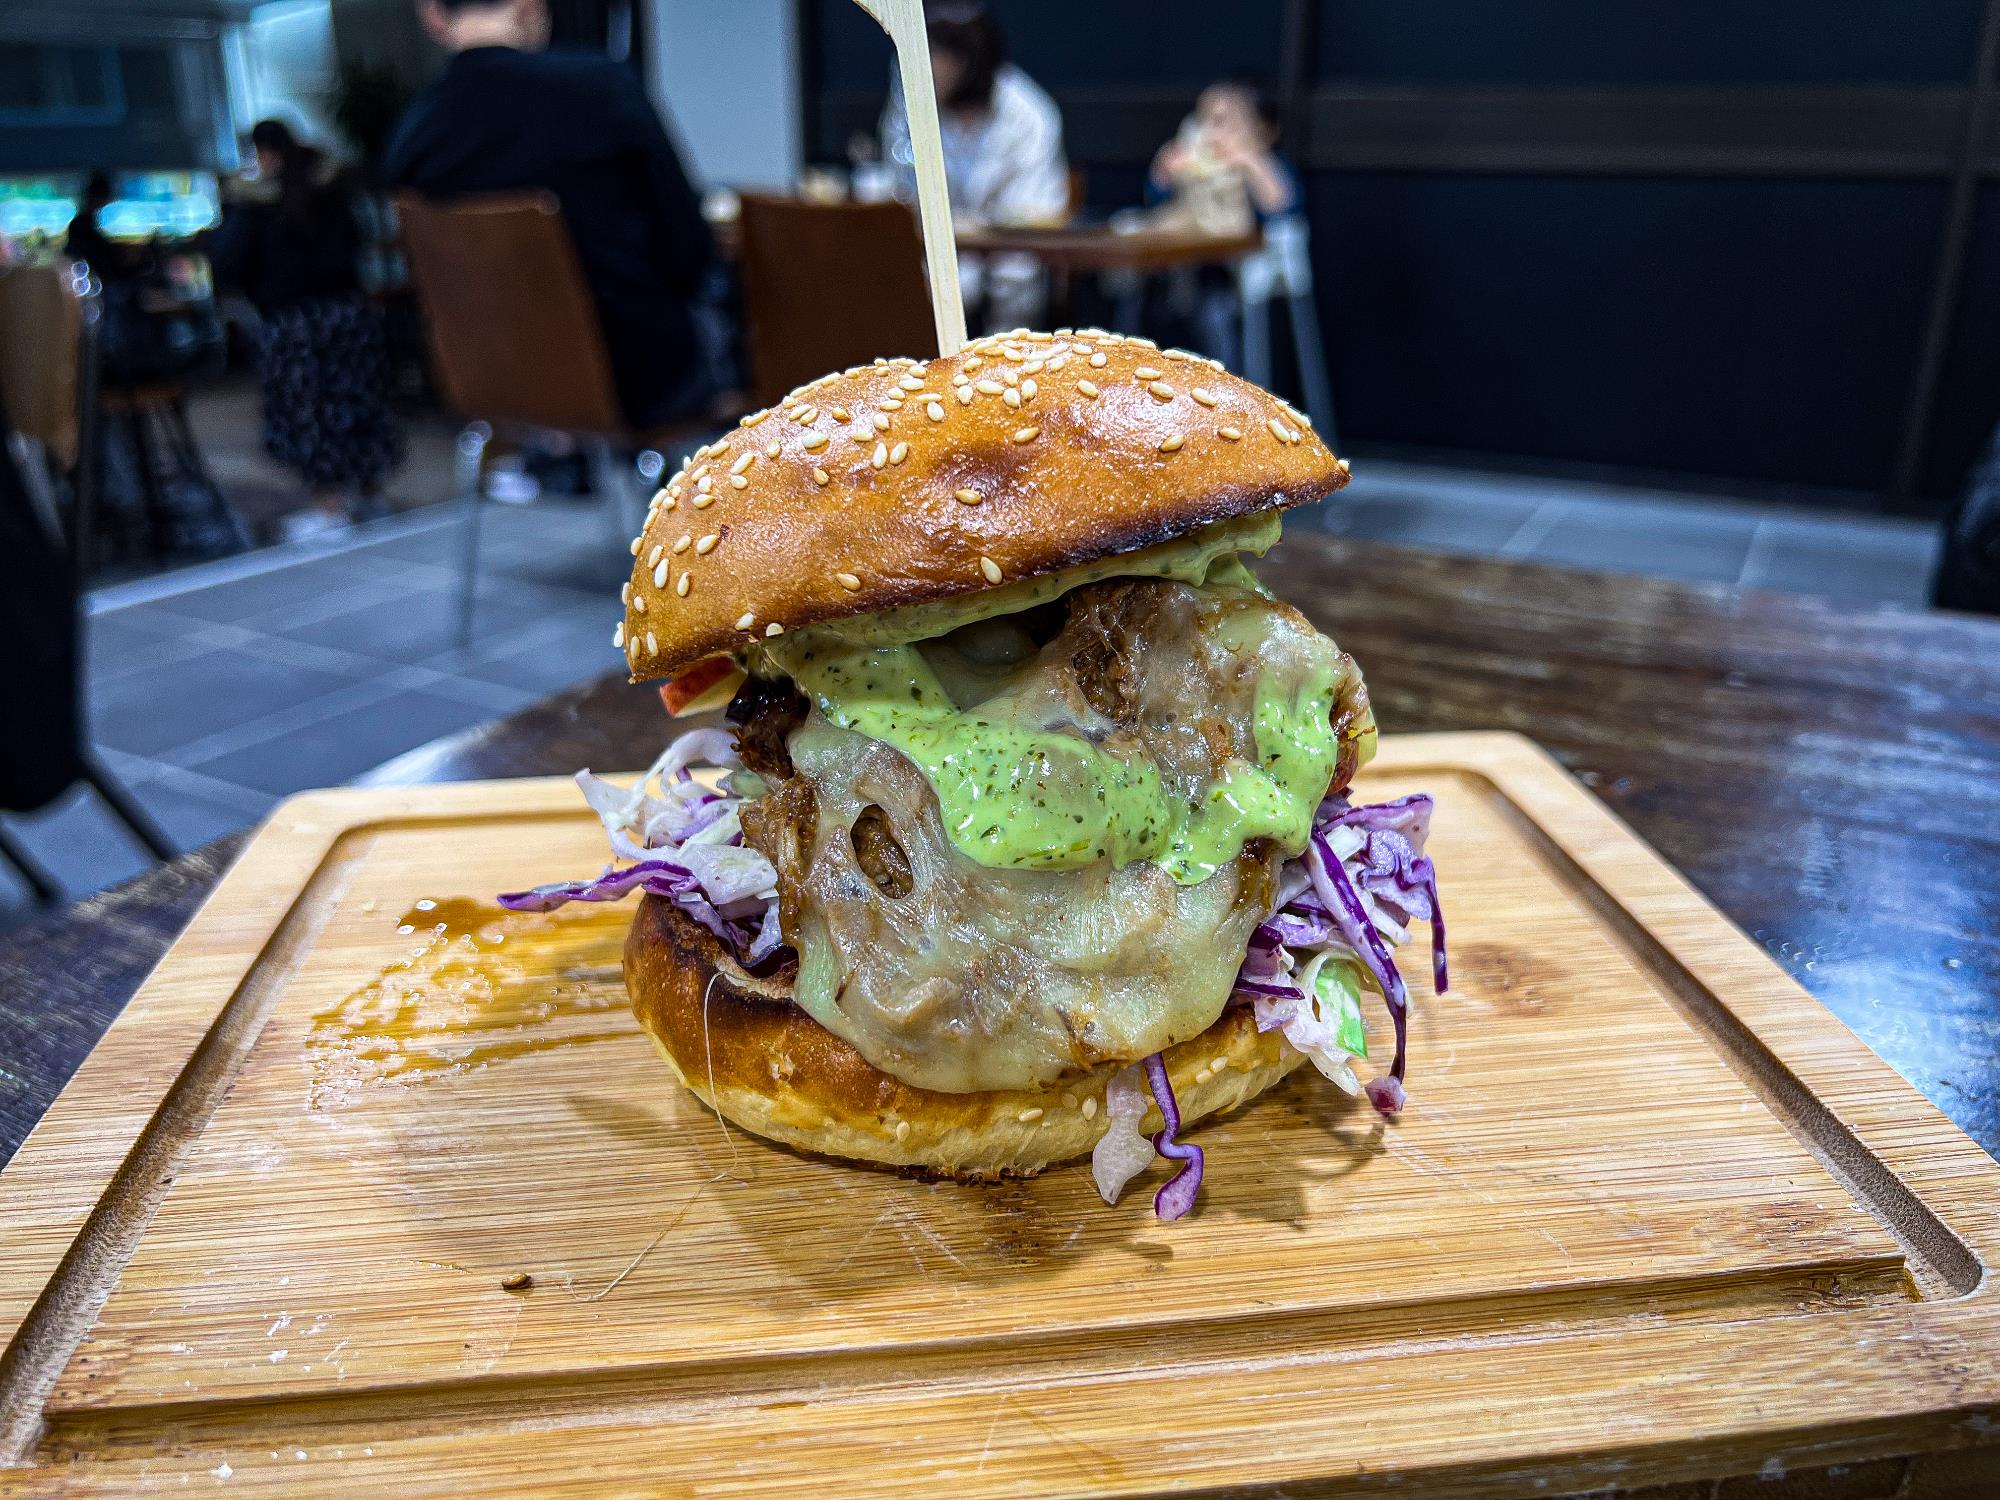 Americas-1-Pulled-Pork-Burger-at-Chimichuri.jpg